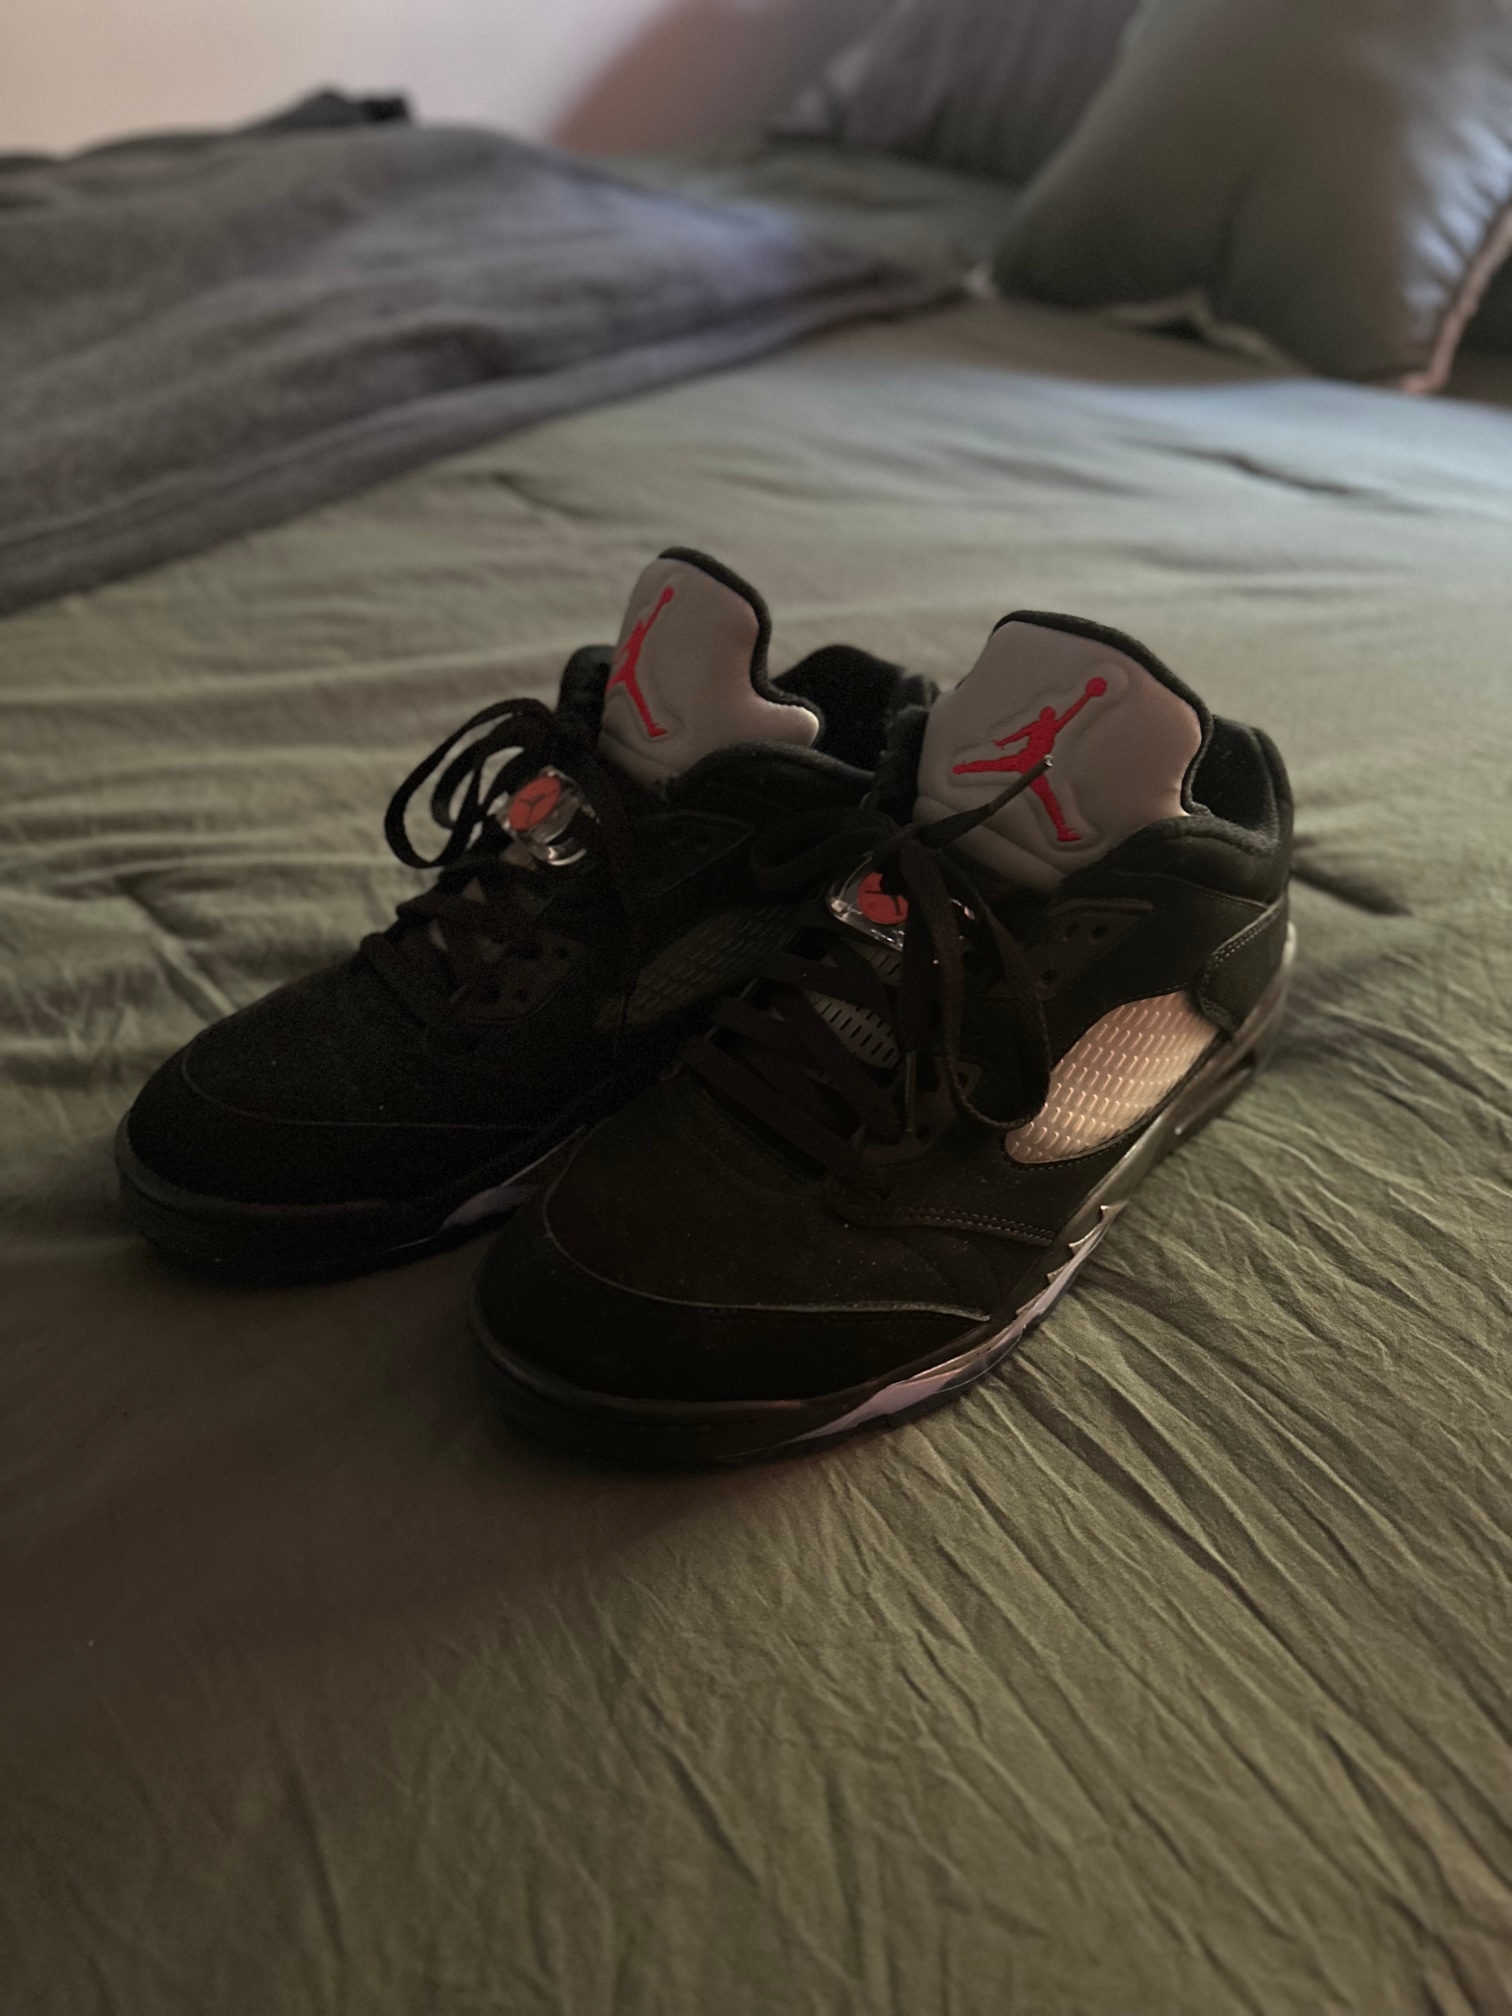 Used Jordan 5 Retro Low Black Metallic Golf Shoes